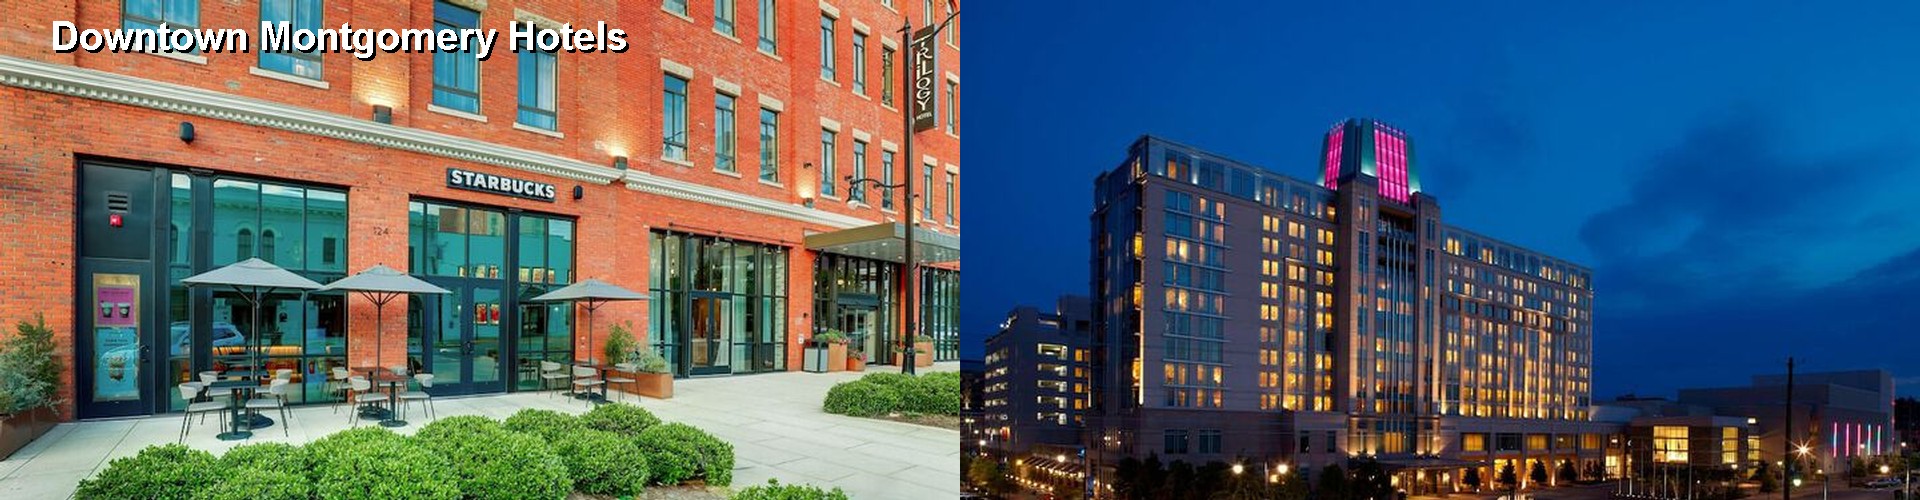 5 Best Hotels near Downtown Montgomery